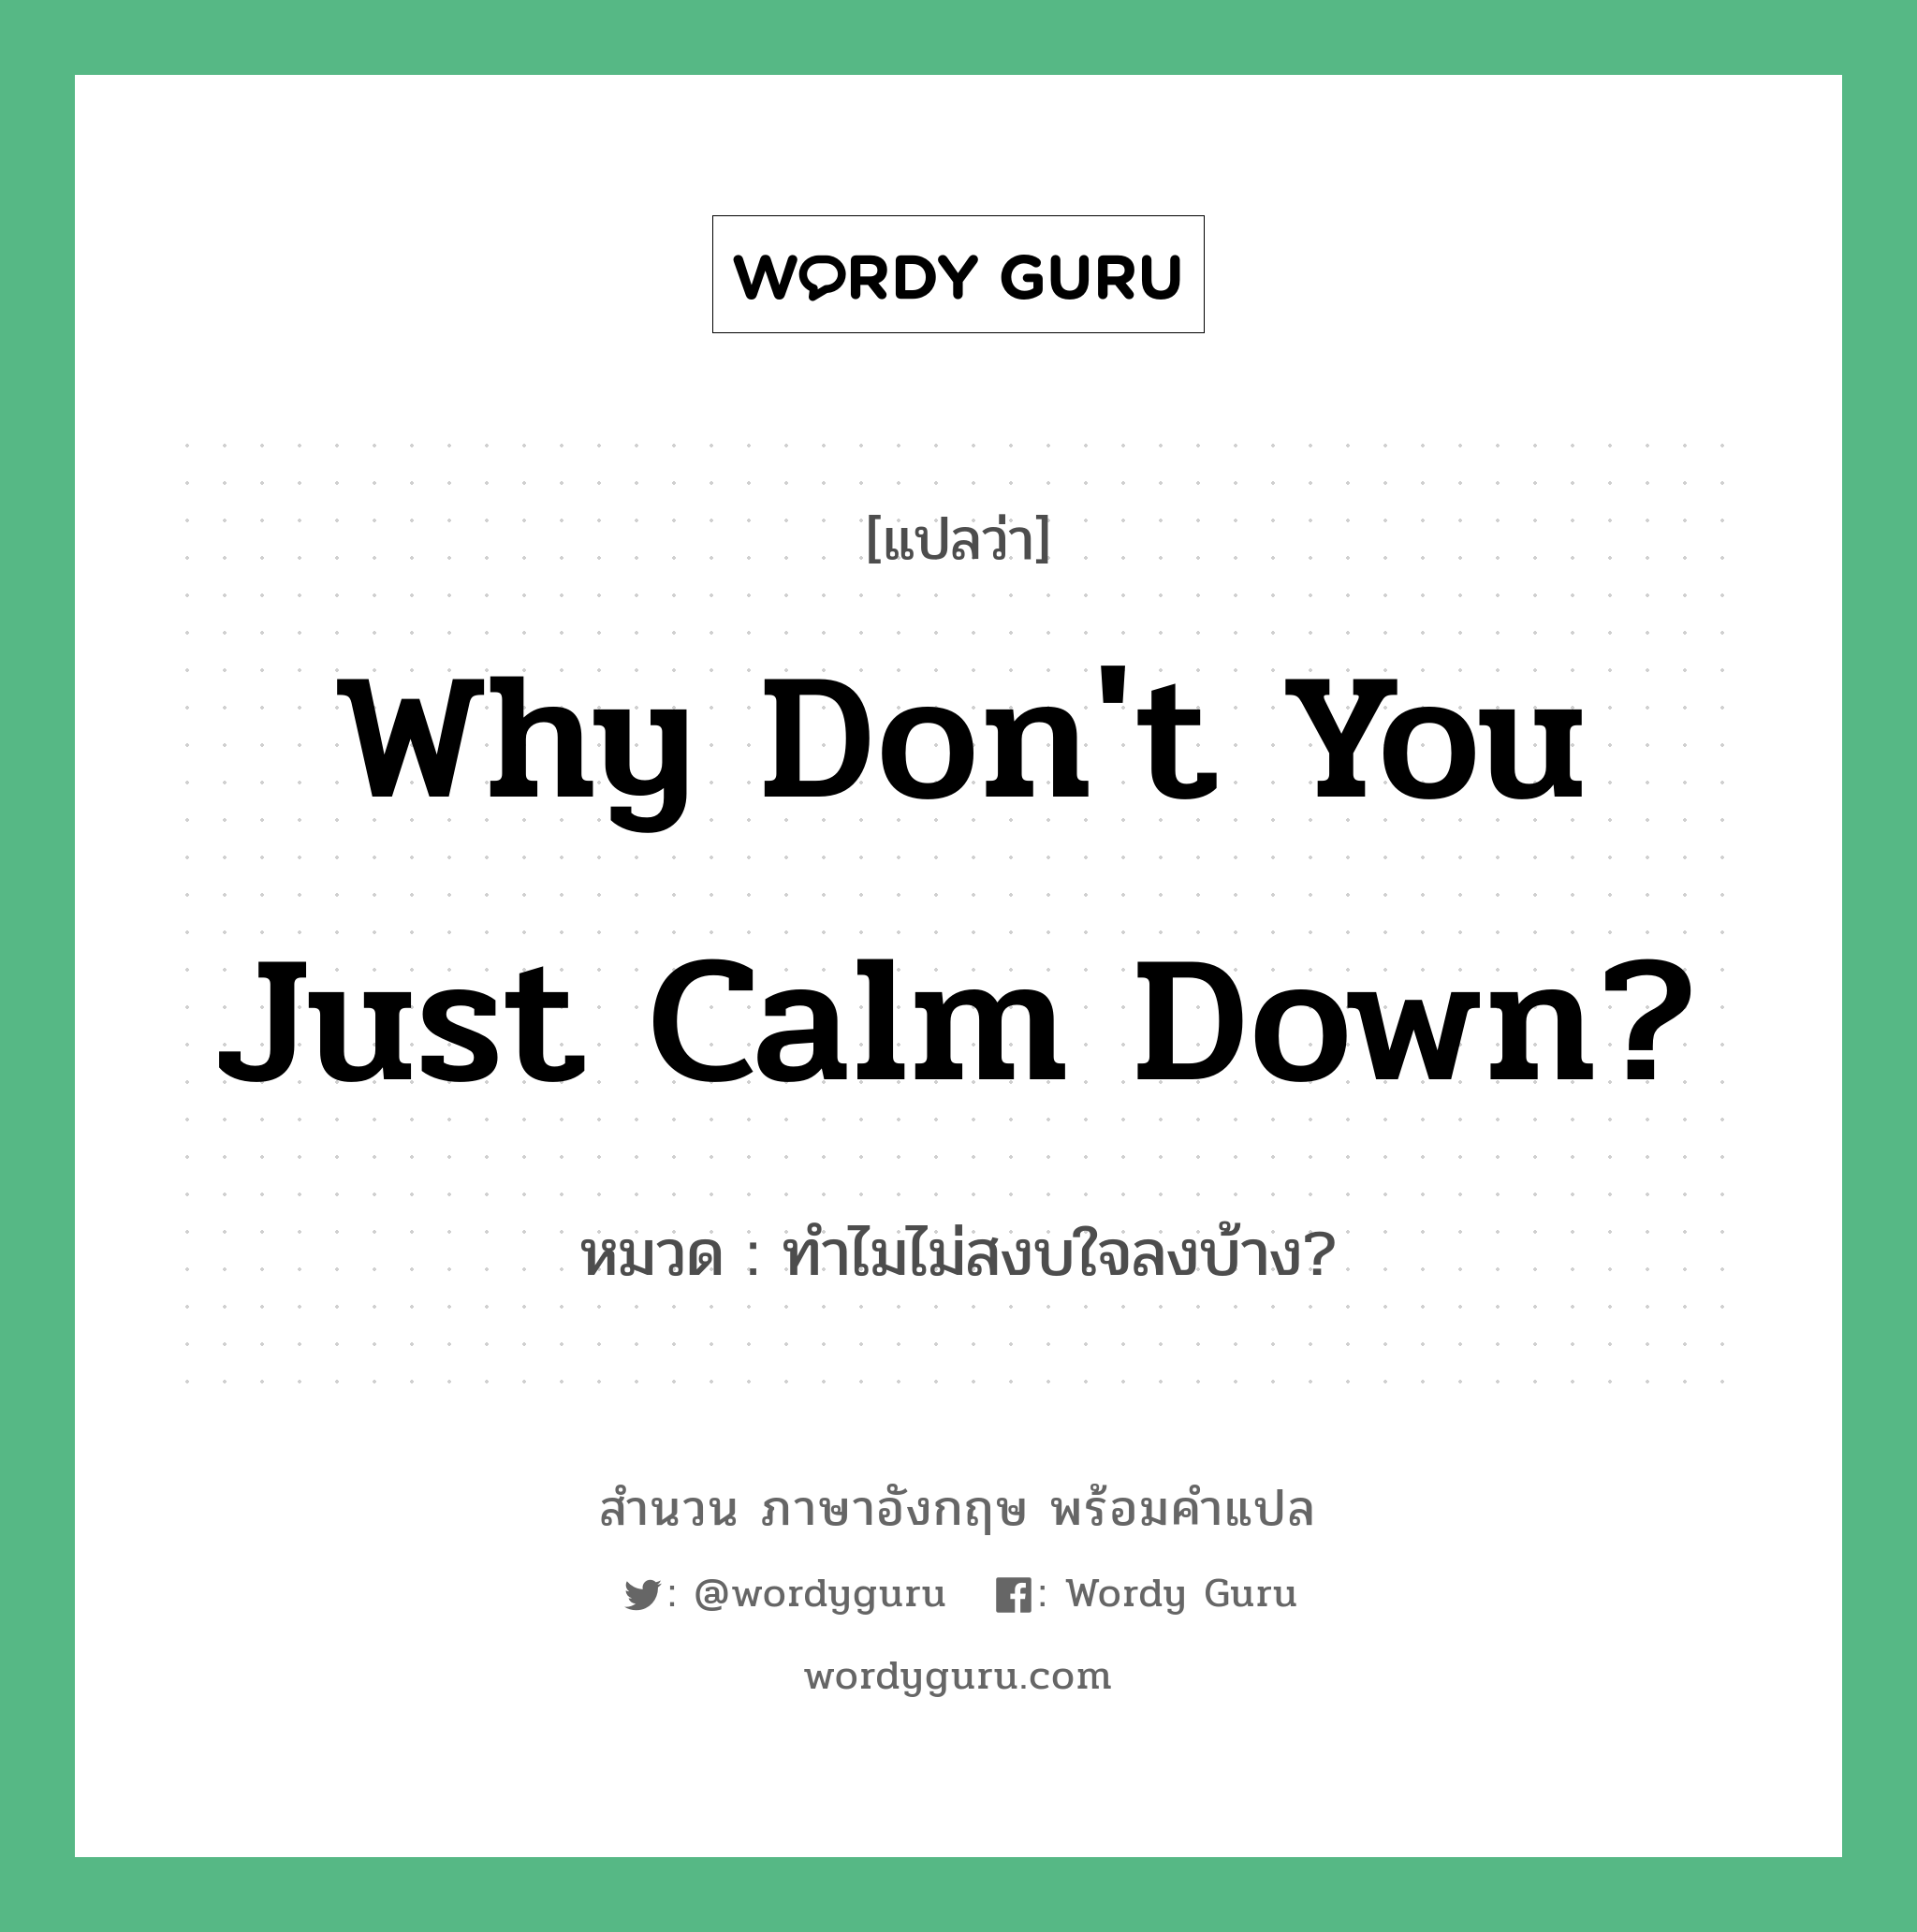 Why don't you just calm down? แปลว่า?, สำนวนภาษาอังกฤษ Why don't you just calm down? หมวด ทำไมไม่สงบใจลงบ้าง?